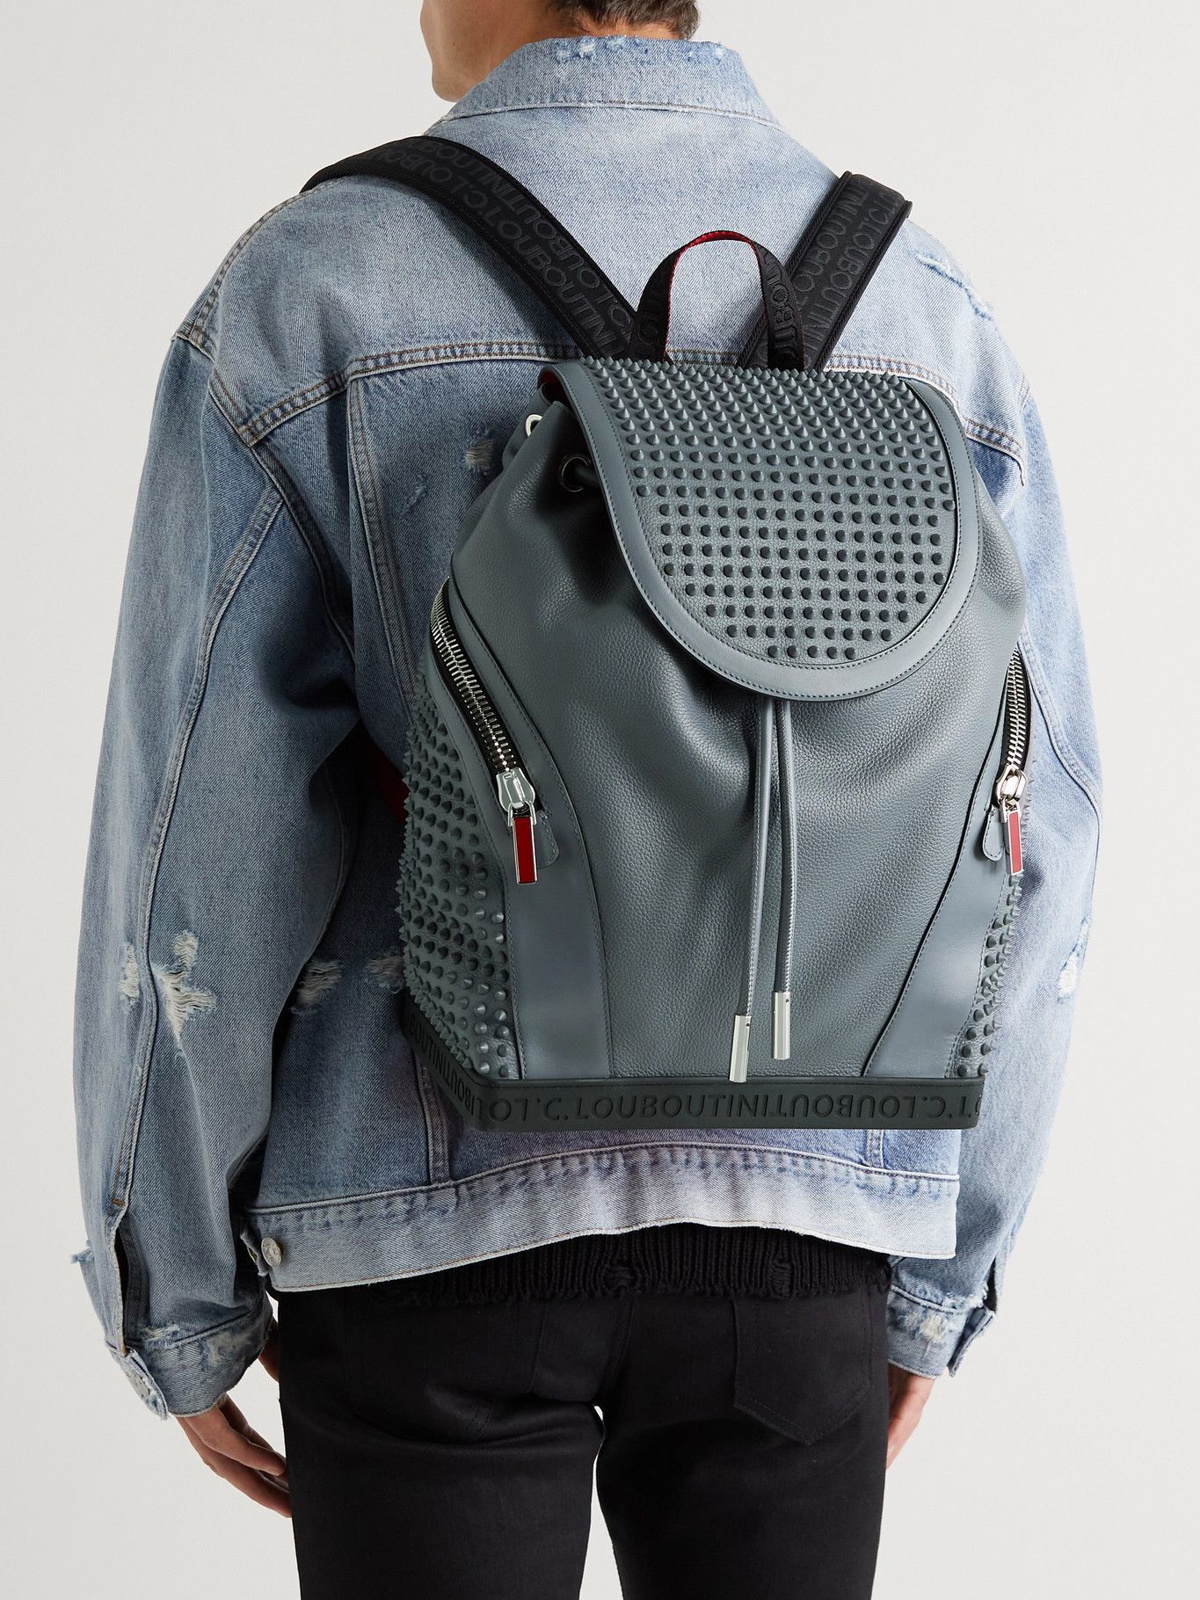 Black Loubifunk spiked leather backpack, Christian Louboutin